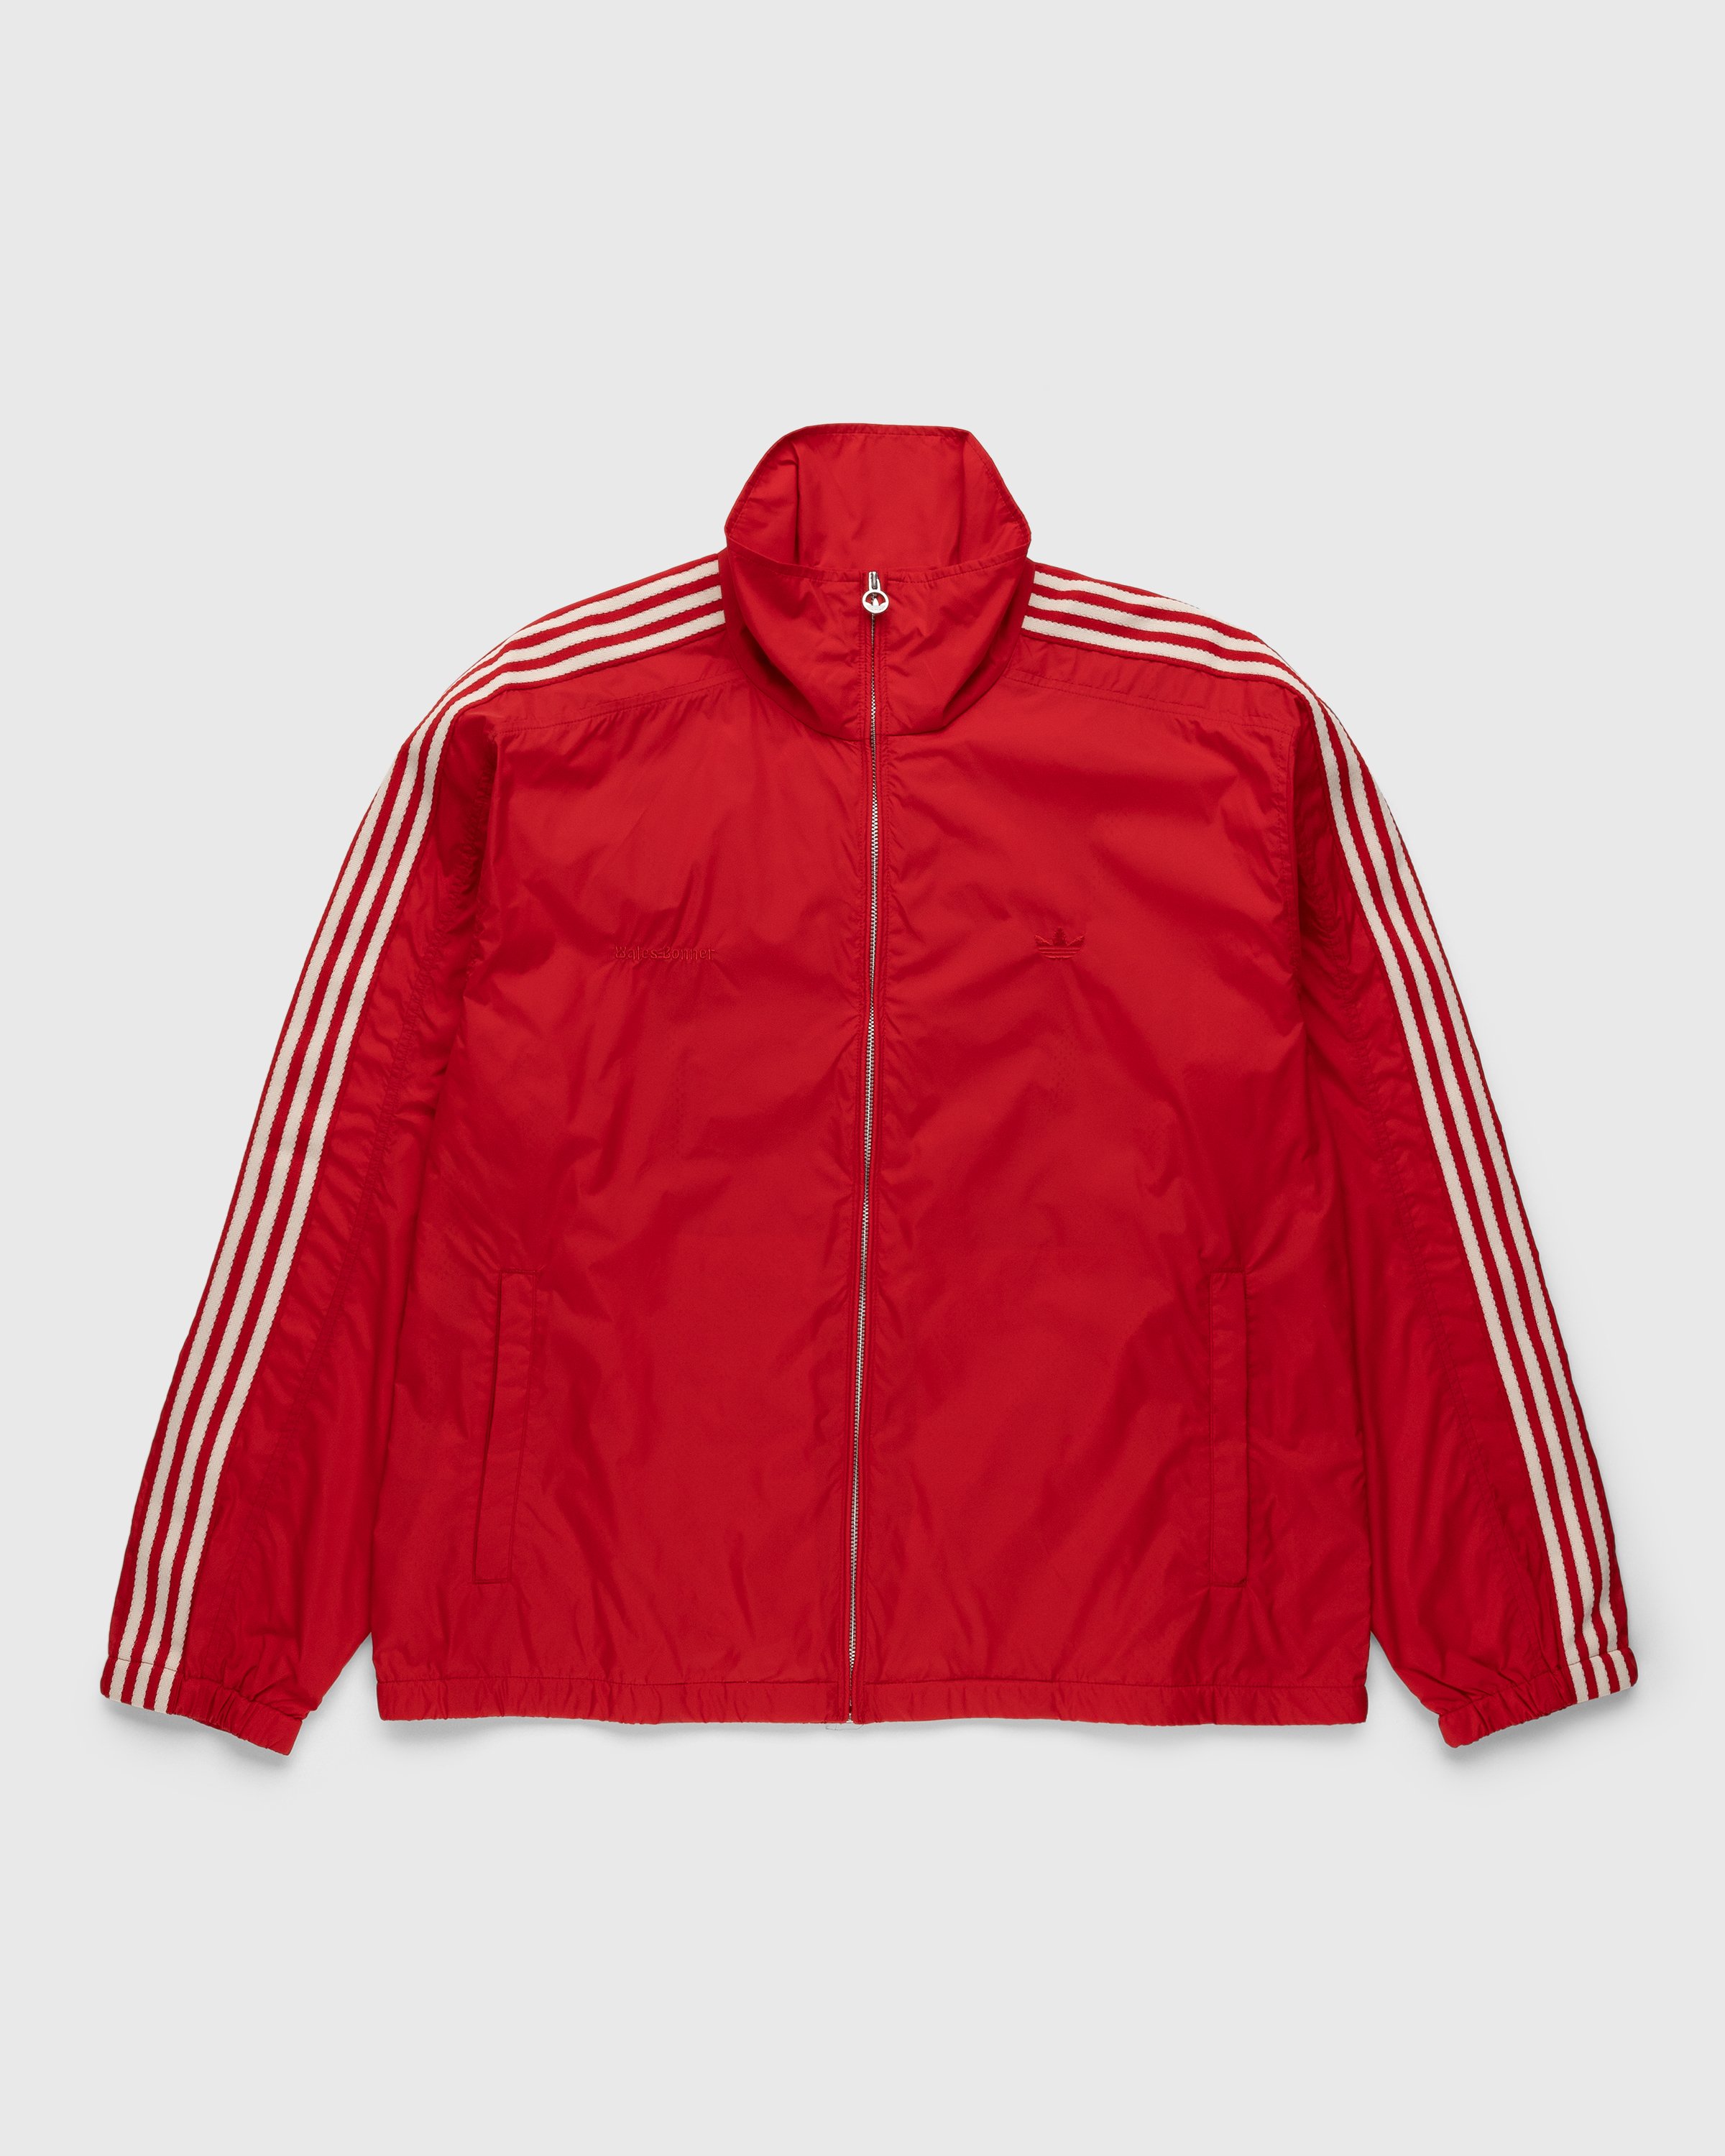 Adidas x Wales Bonner - WB Light Jacket Scarlet - Clothing - Red - Image 1